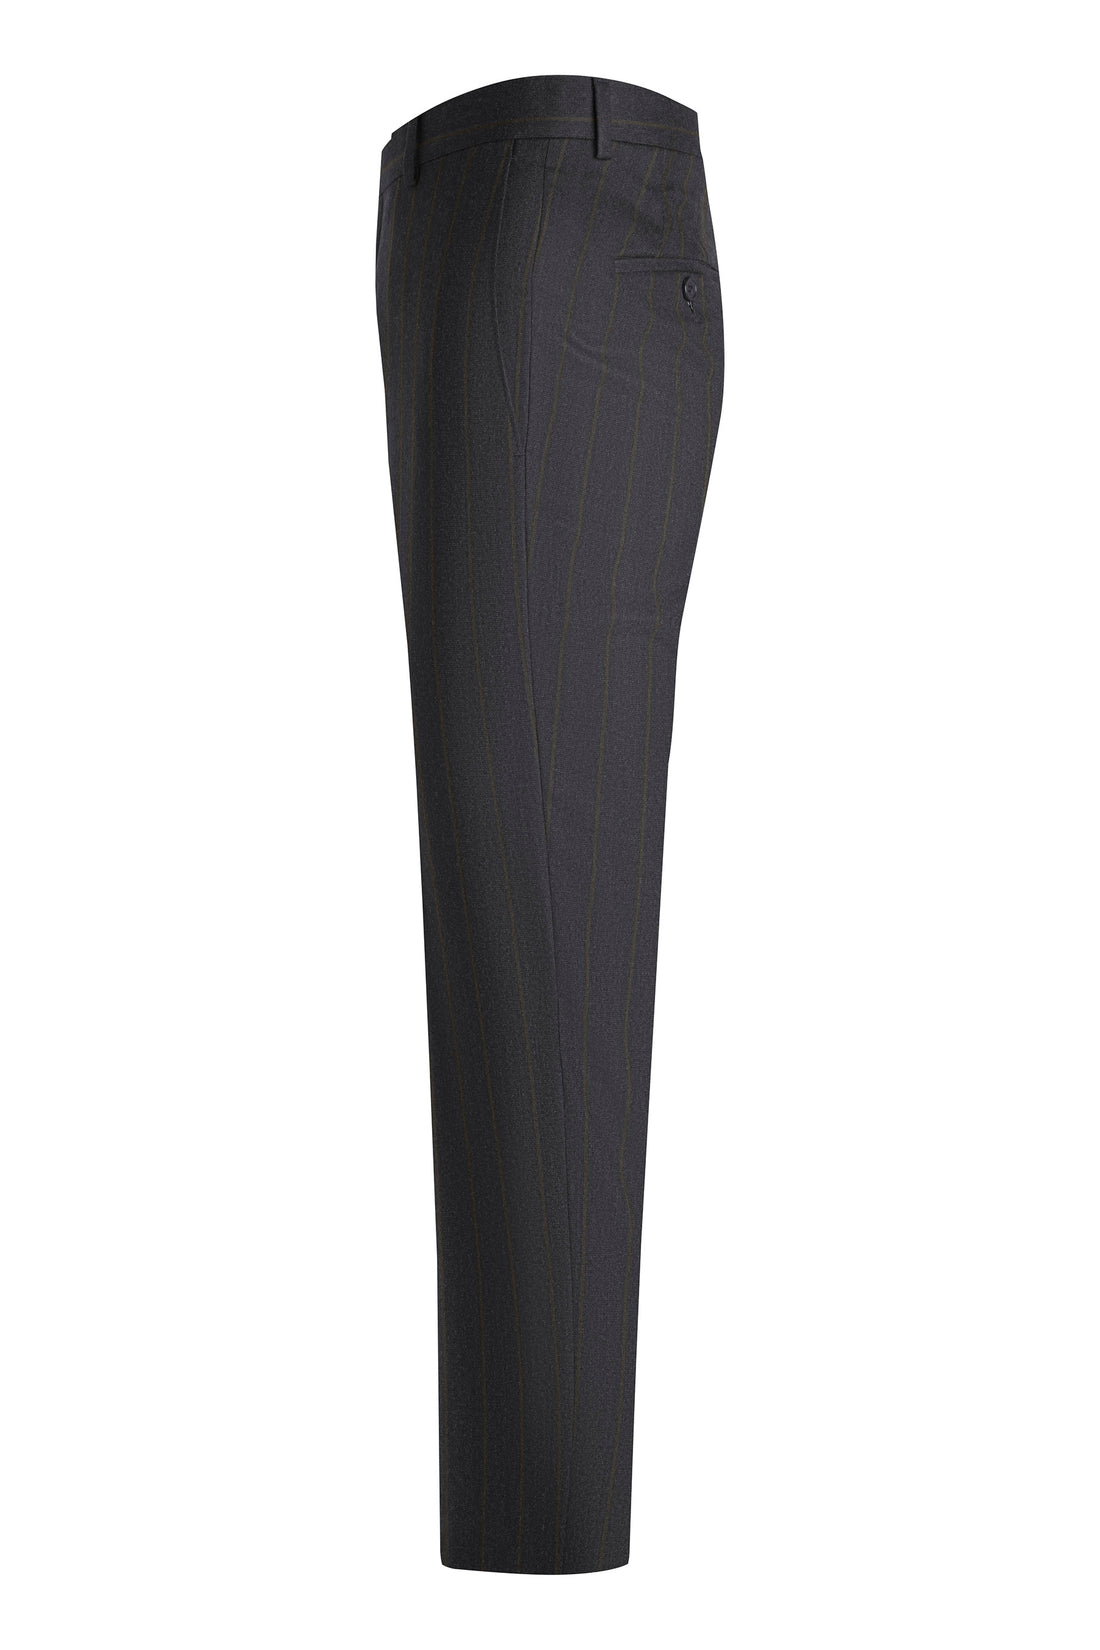 Charcoal Stripe Soft Loop Suit side pant